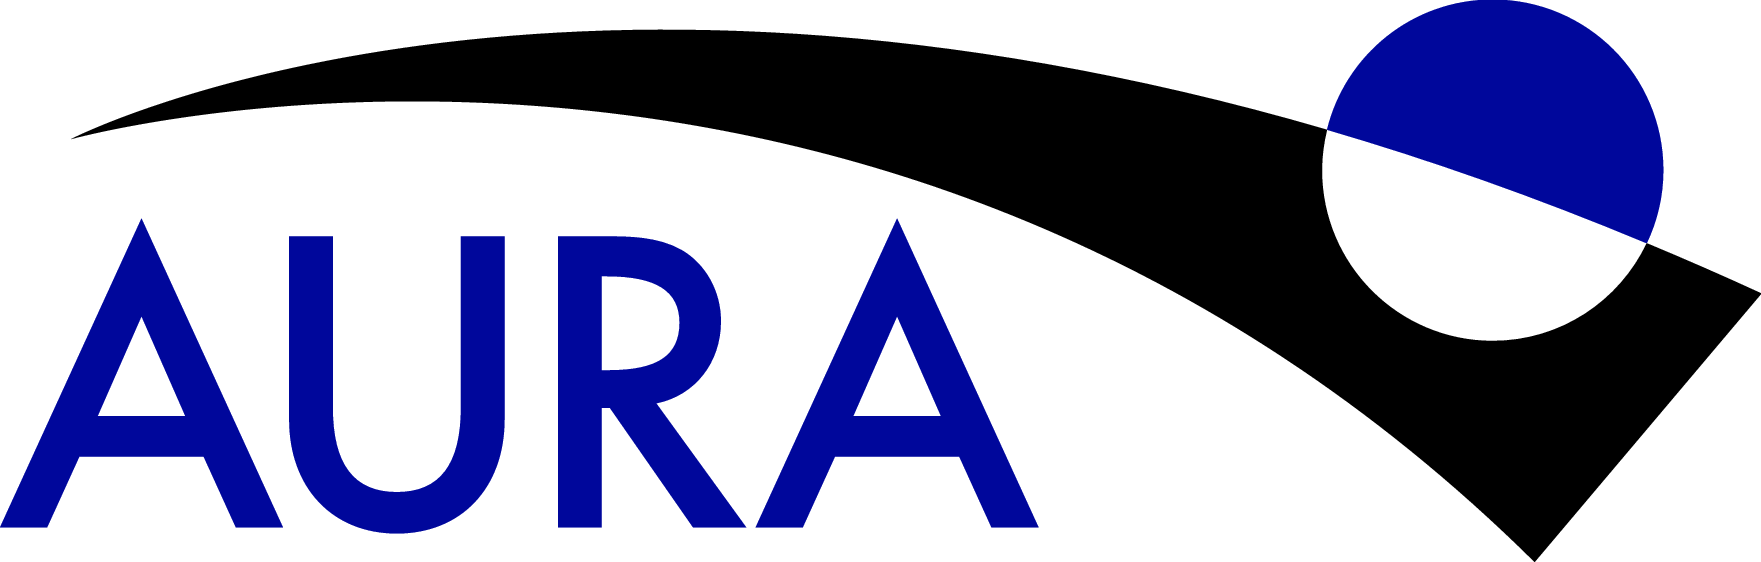 AcceleDent Aura Logo (JPG)